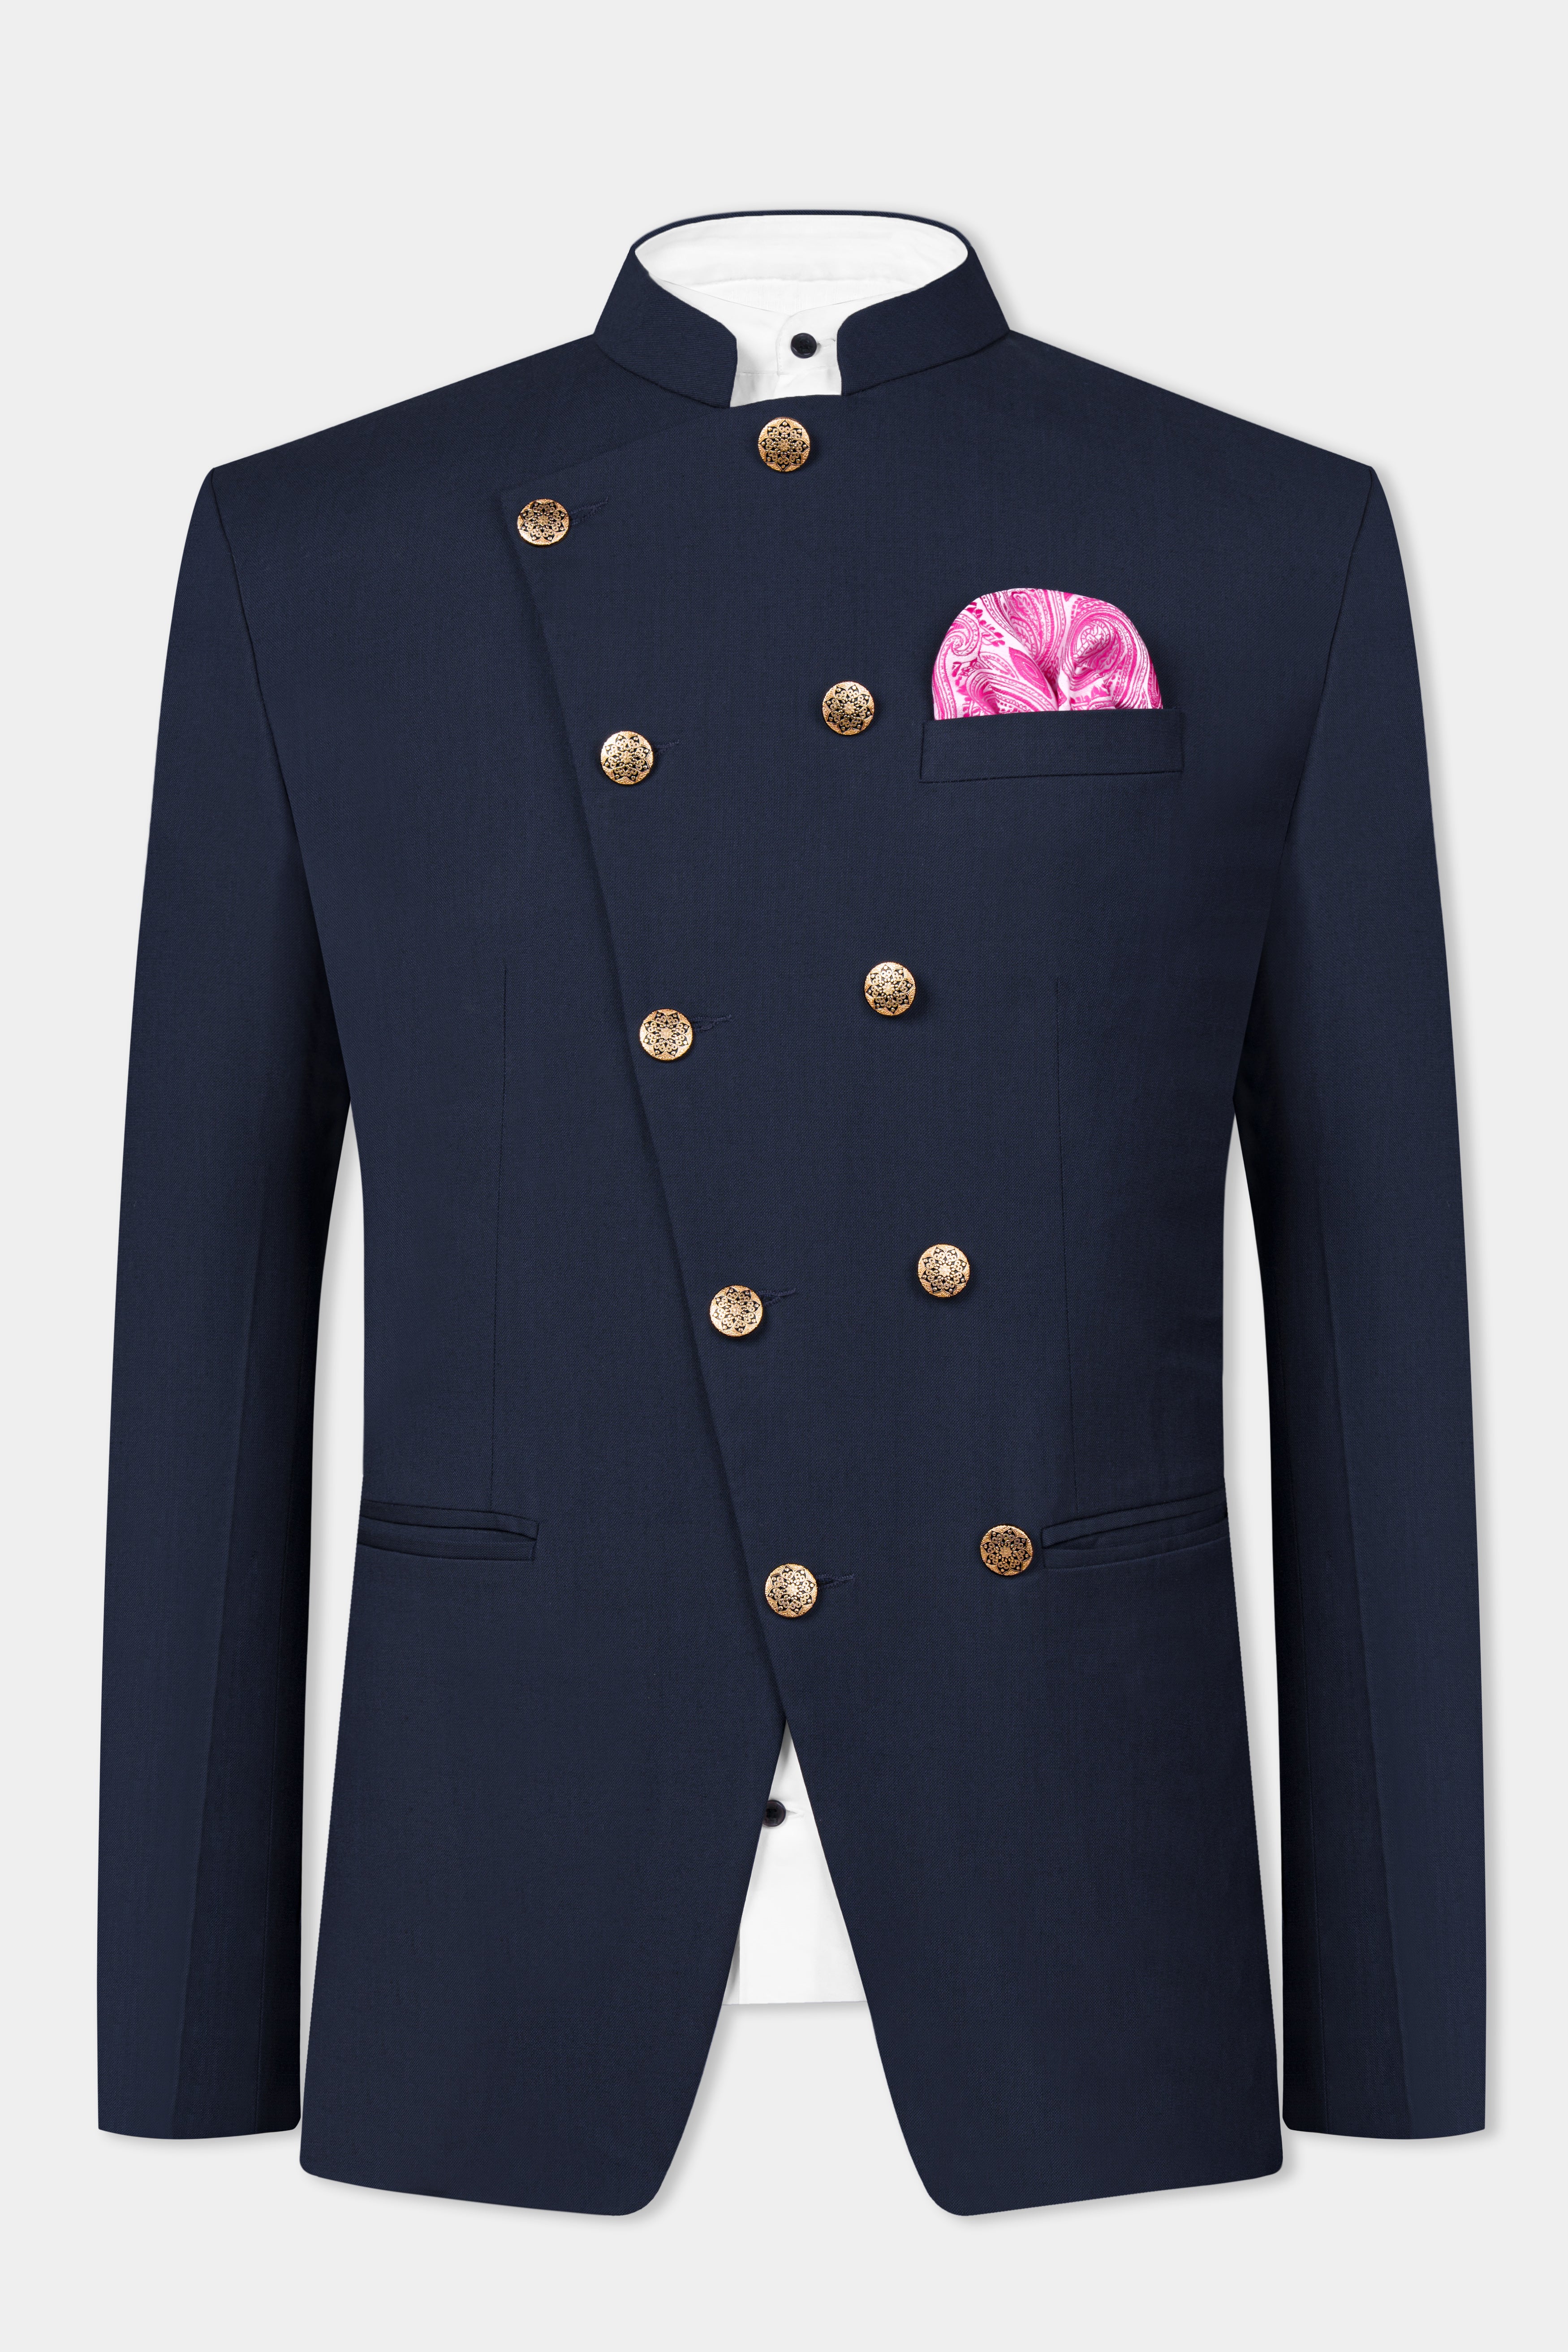 Cinder Blue Wool Rich Cross Placket Bandhgala Suit